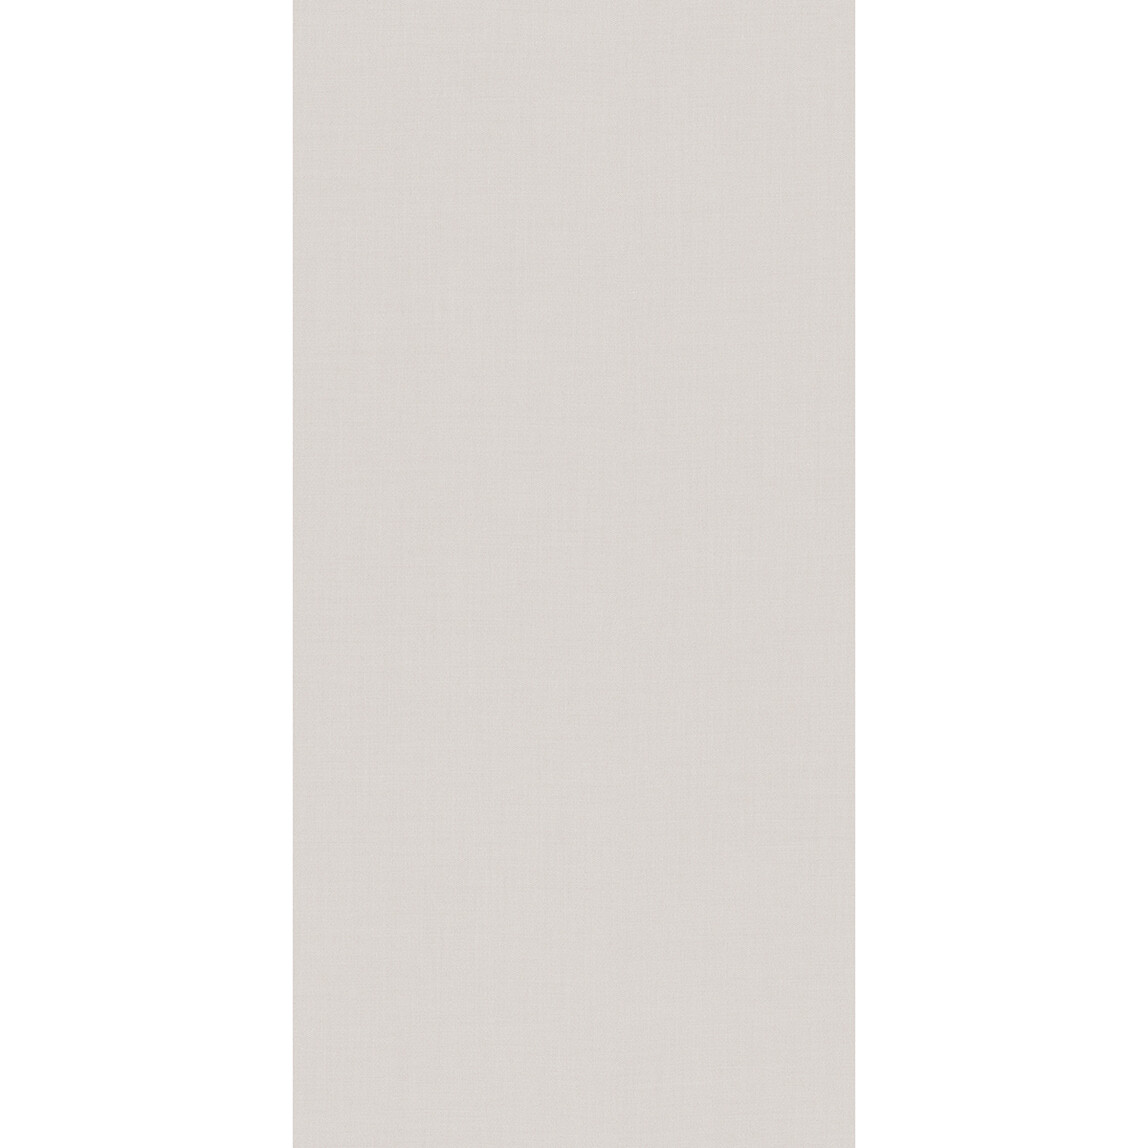    Orma Paris Bej Yonga Levha 0,8x210x280 cm 5,88 m2 